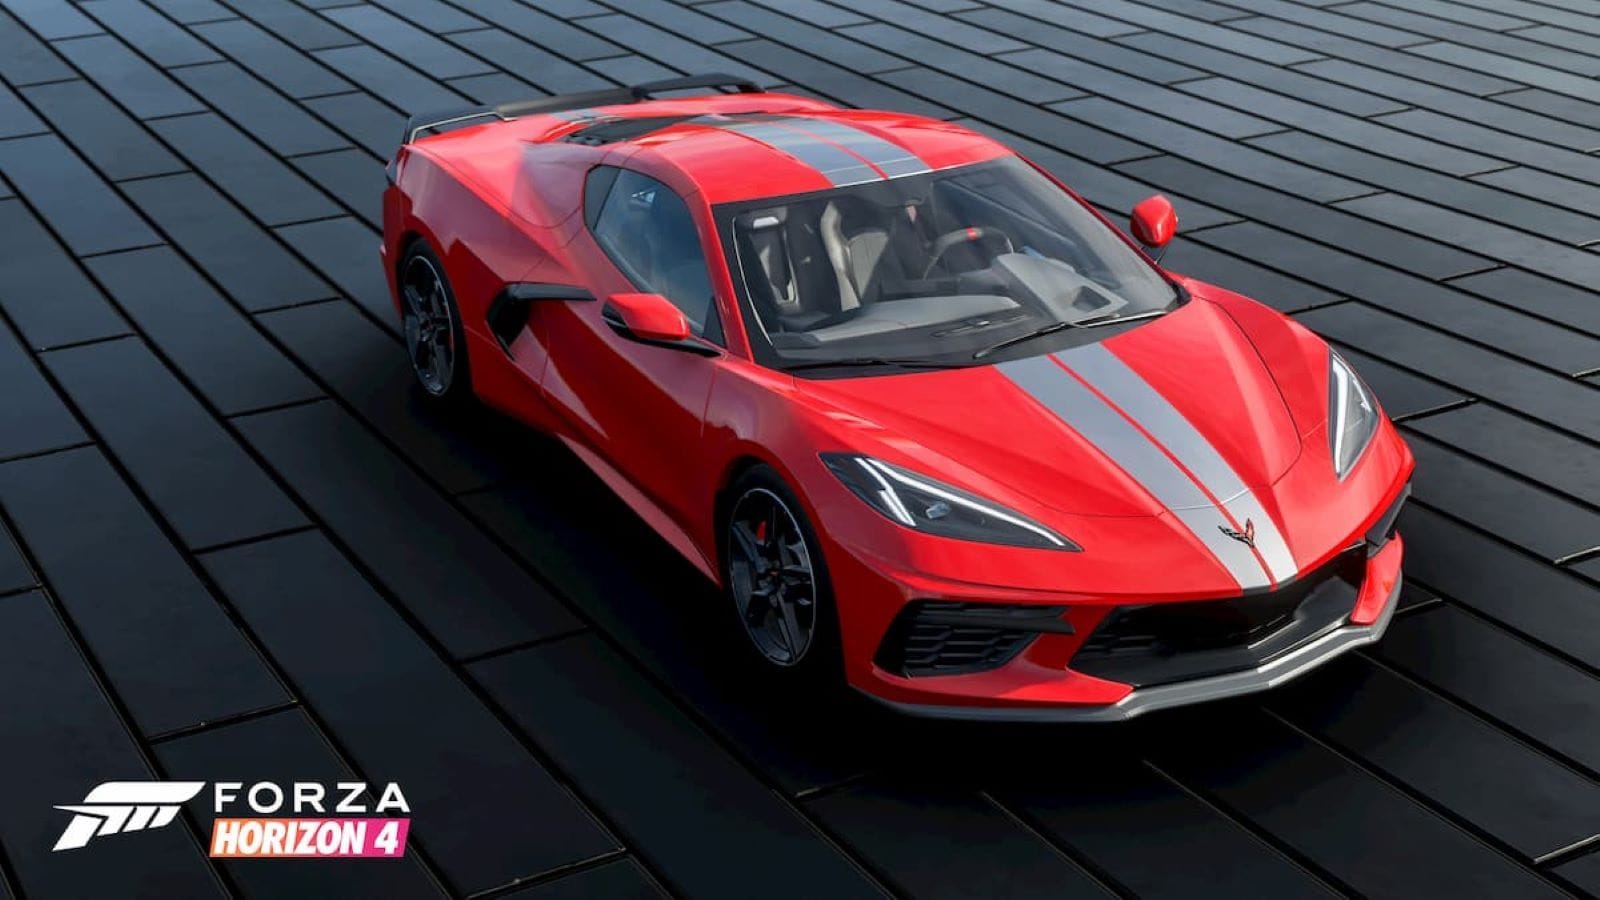 İmagining Forza Horizon 6 - Trailer 4K 